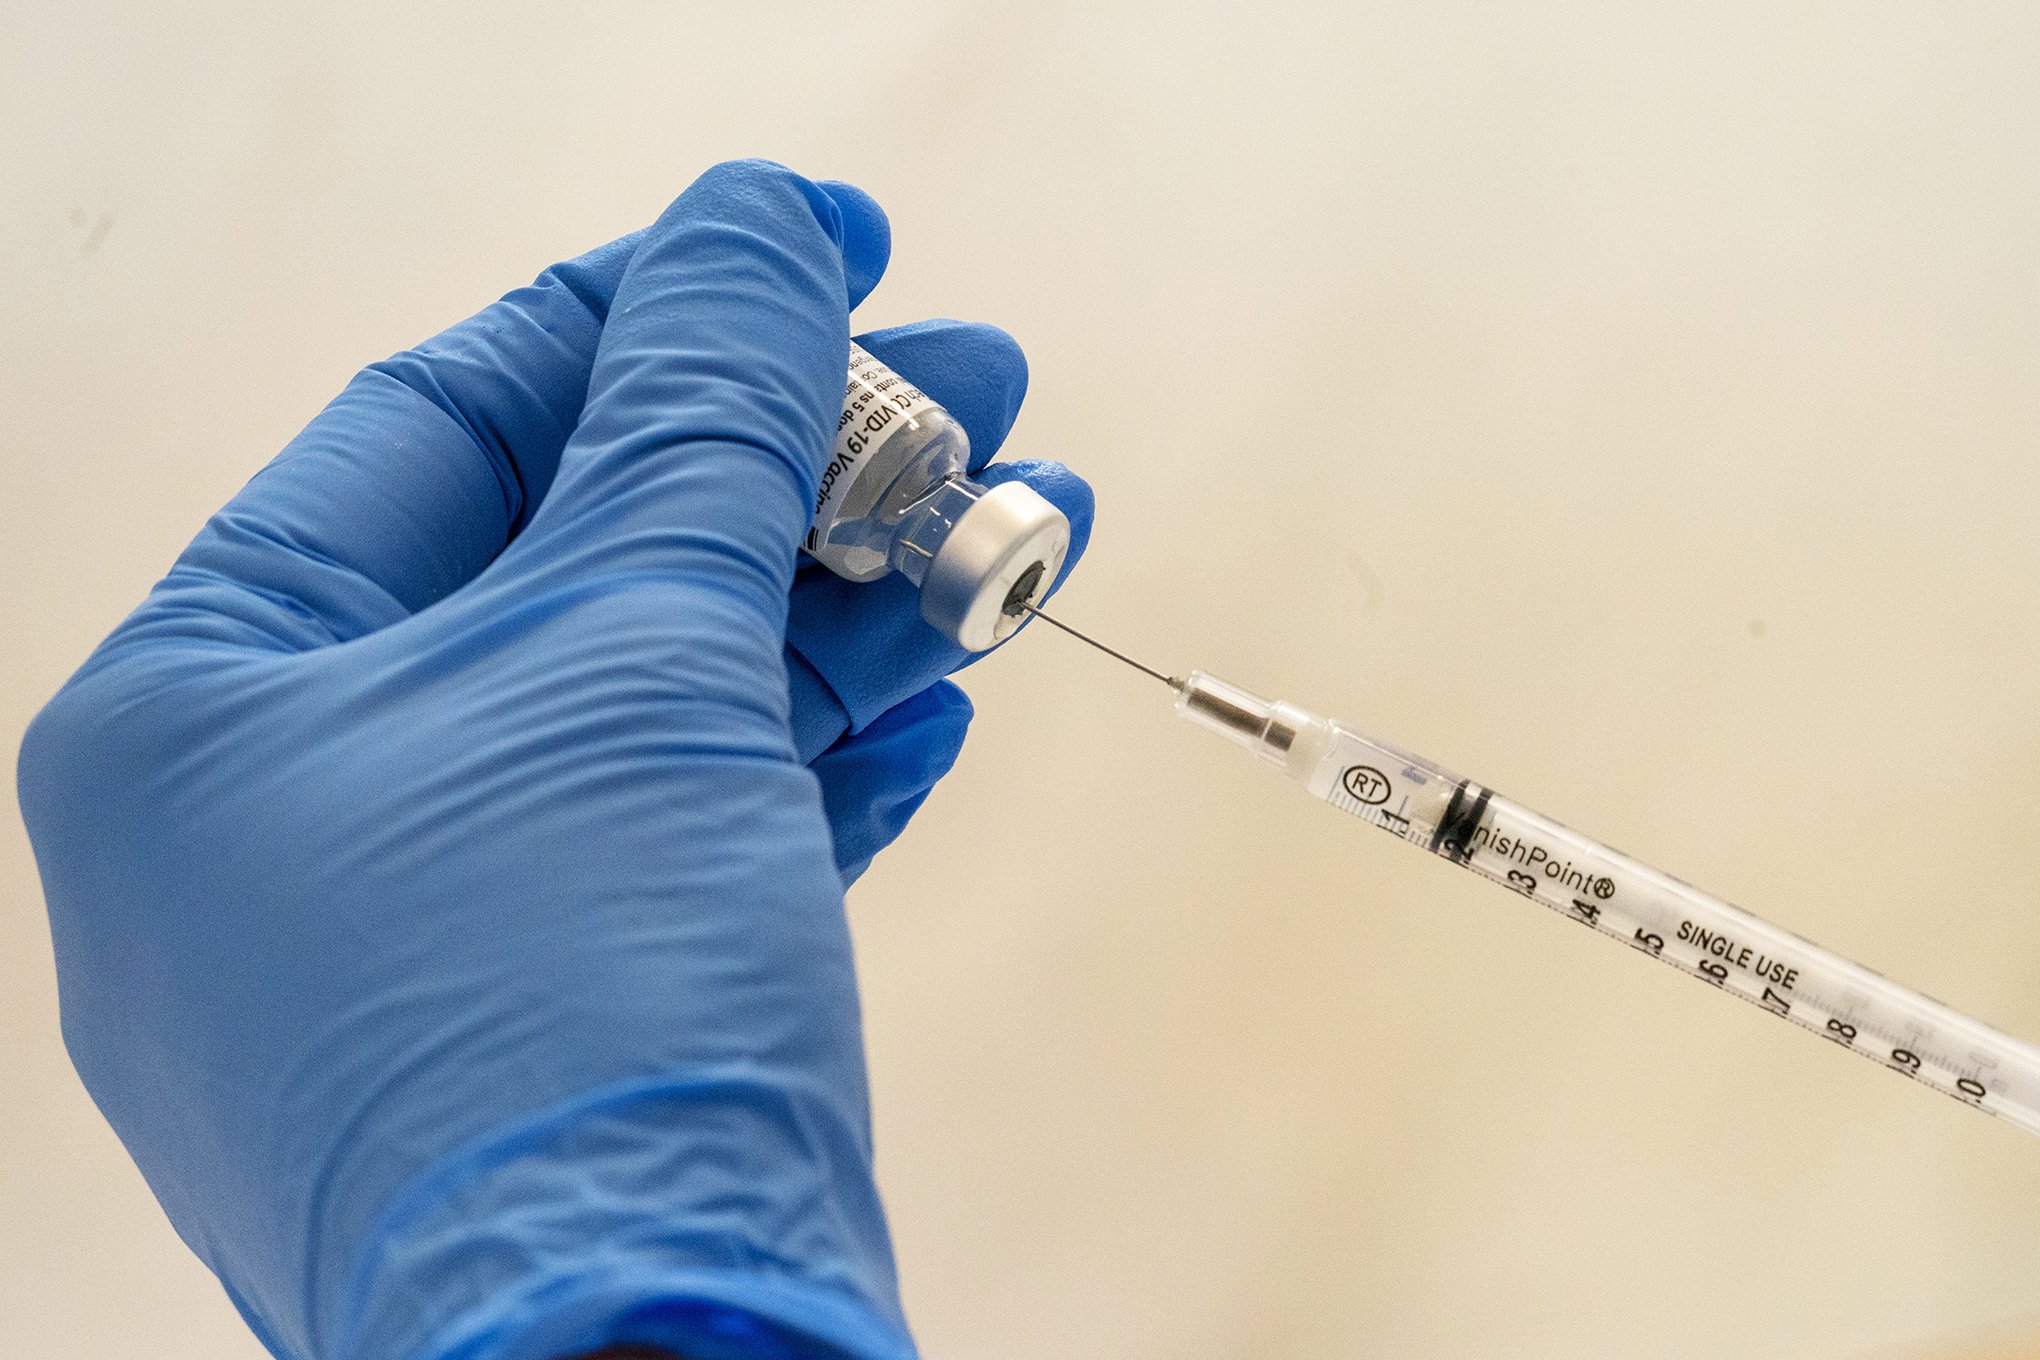 Pharmacist Paula Agoglia fills a syringe with the COVID-19 vaccine